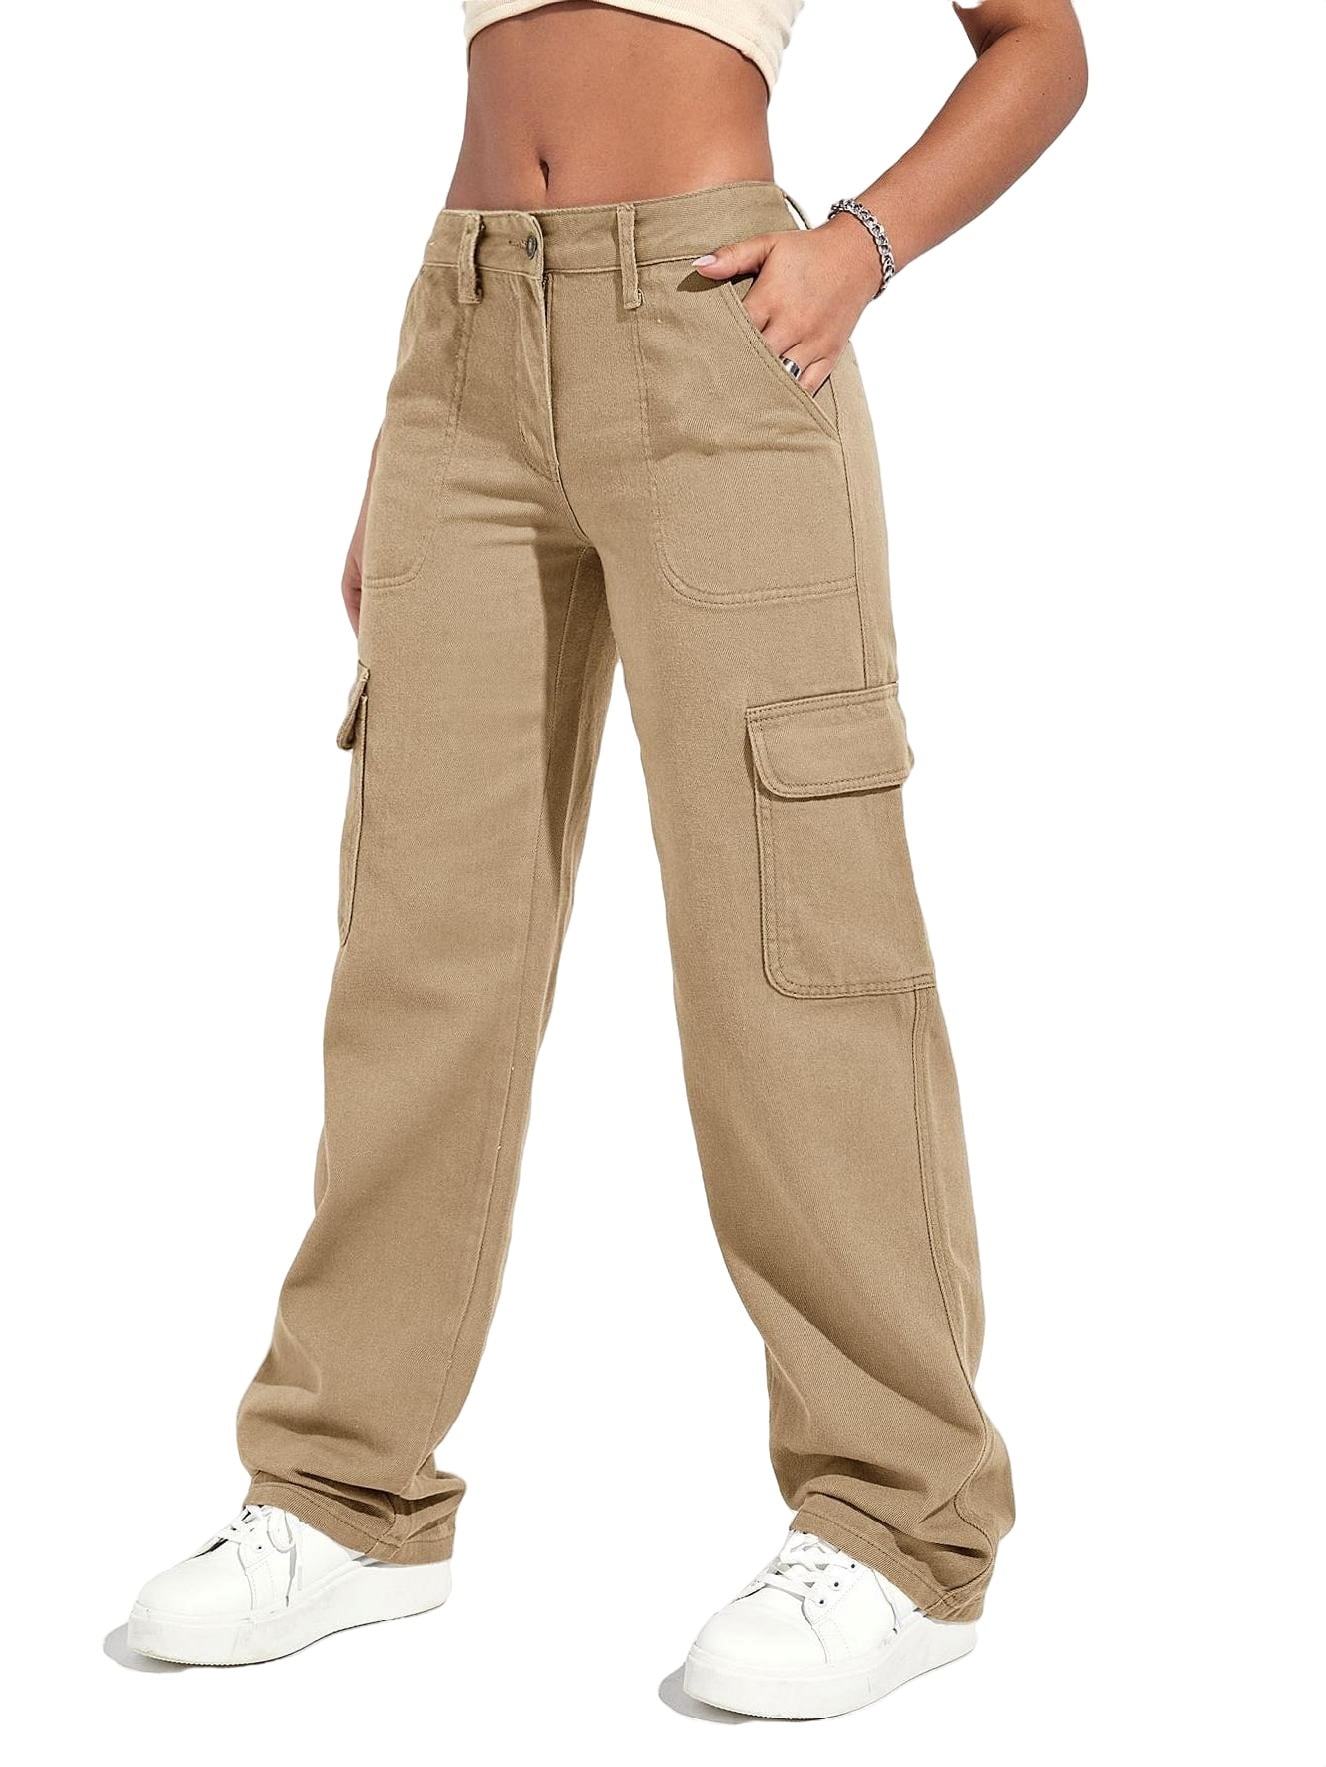 Plain Cargo Pants Khaki Women's Jeans (Women's) 